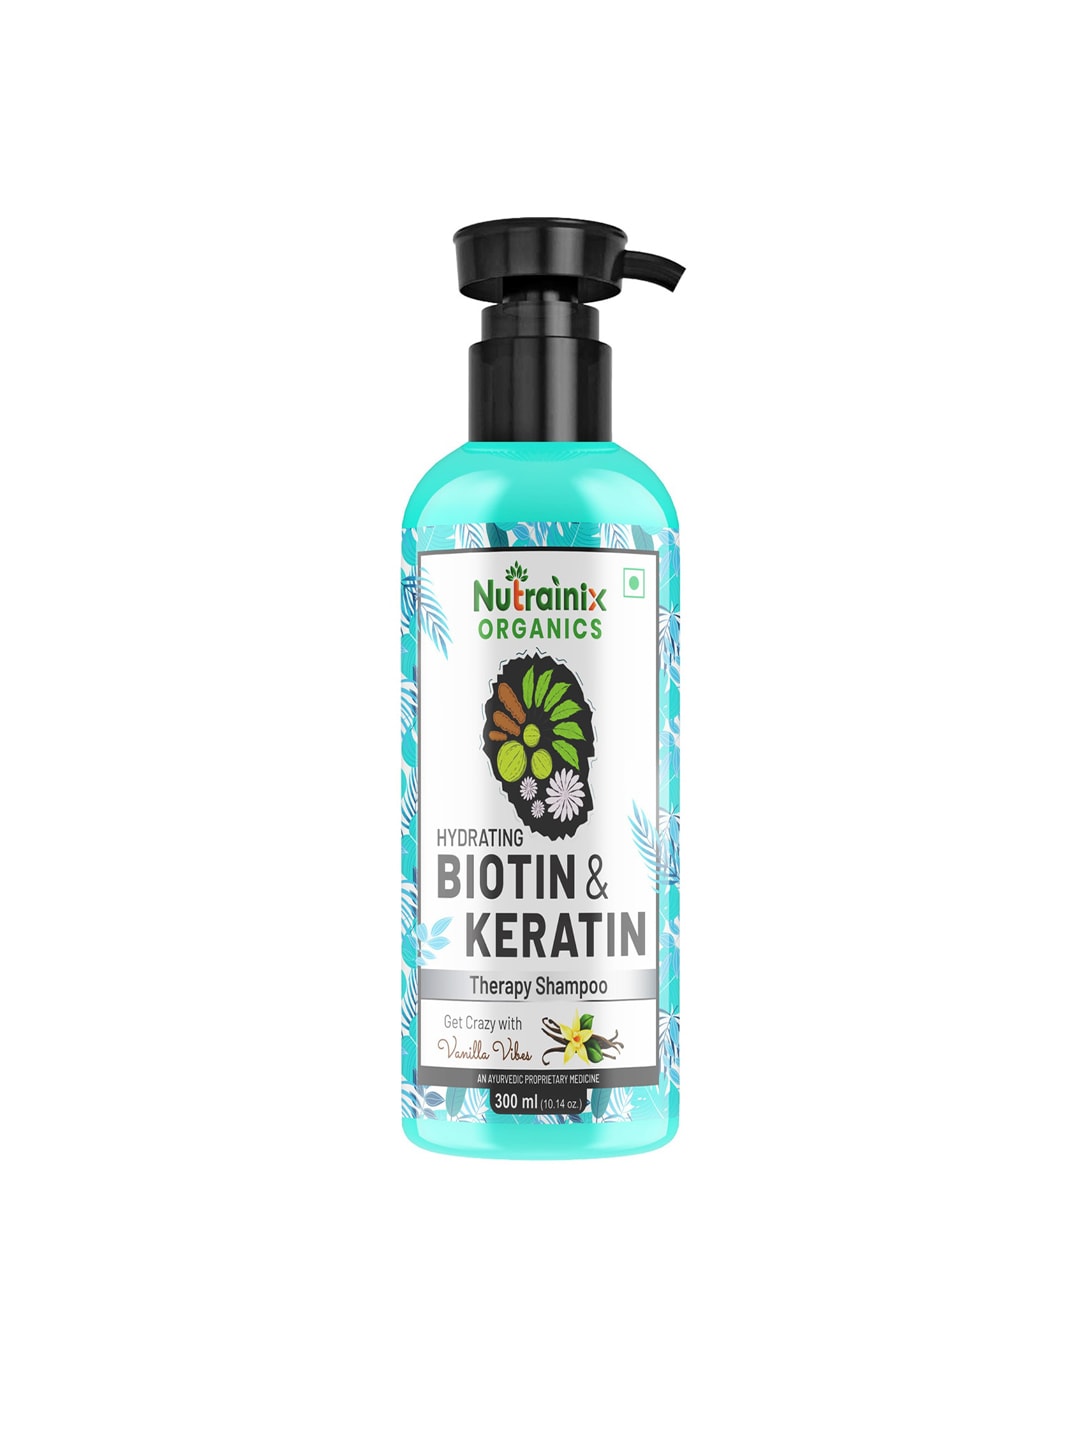 Nutrainix Organics White Biotin & Keratin Shampoo Price in India